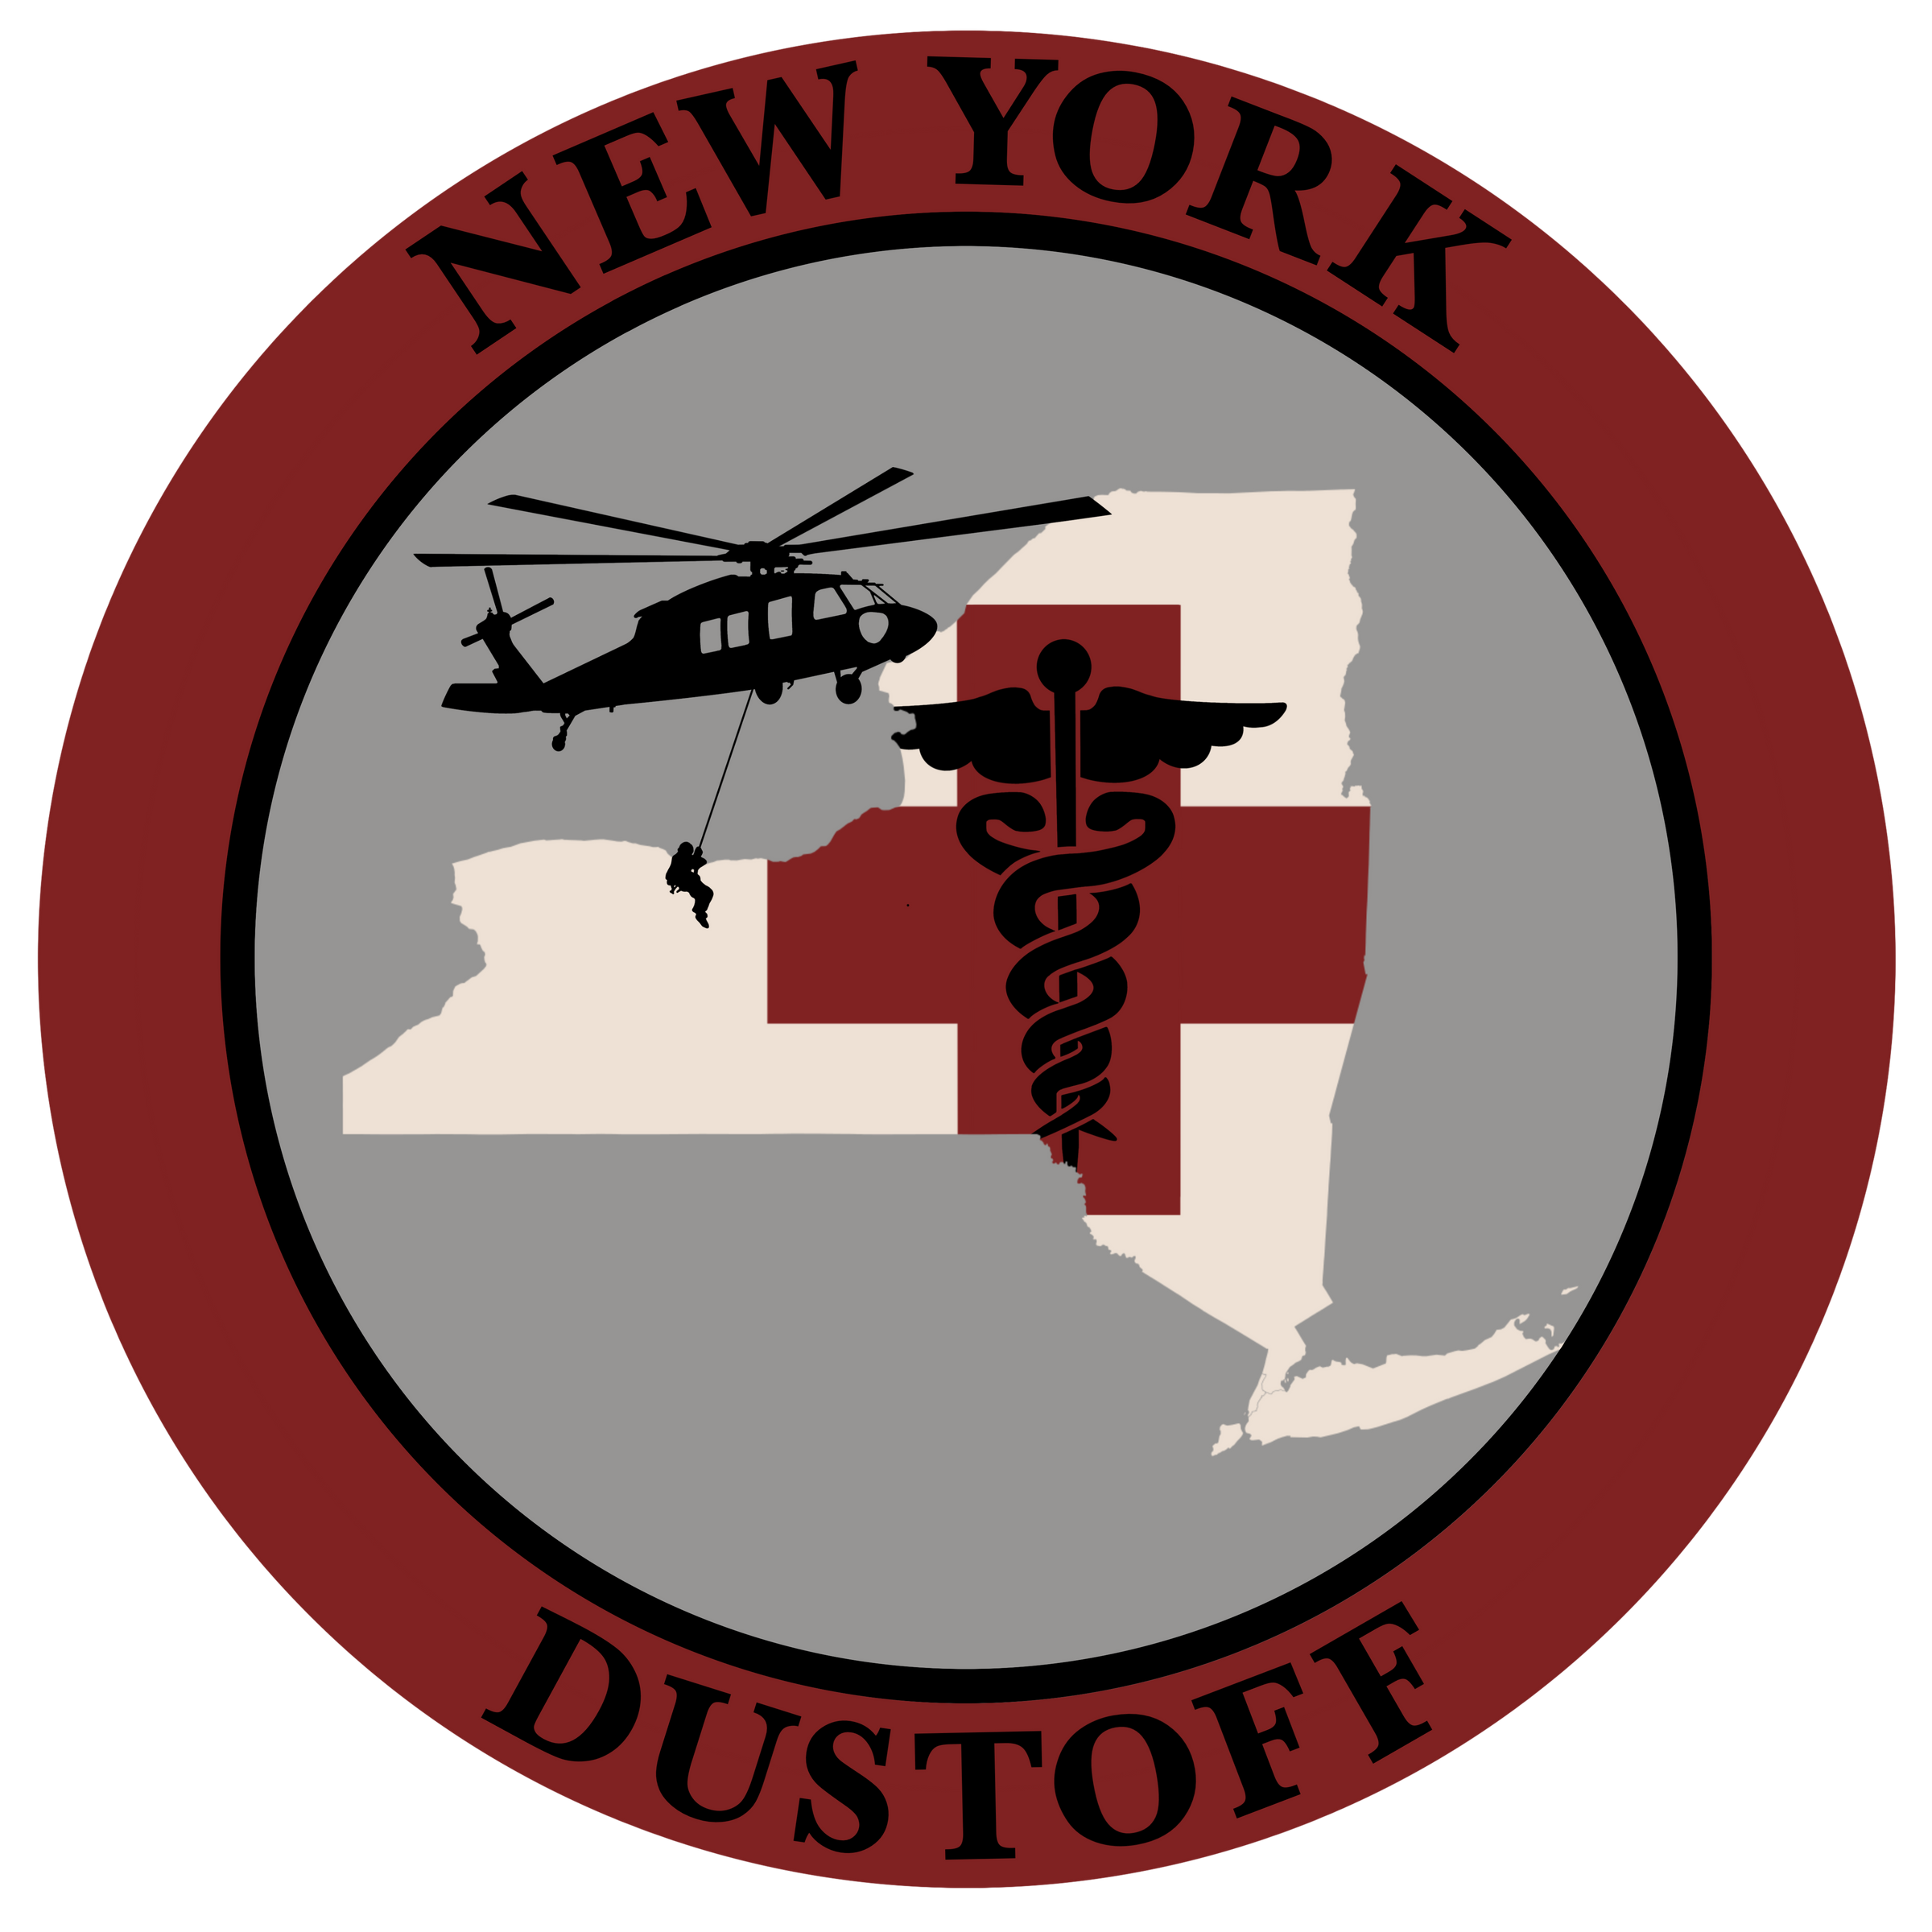 New York Dustoff - 20 Jan 2021